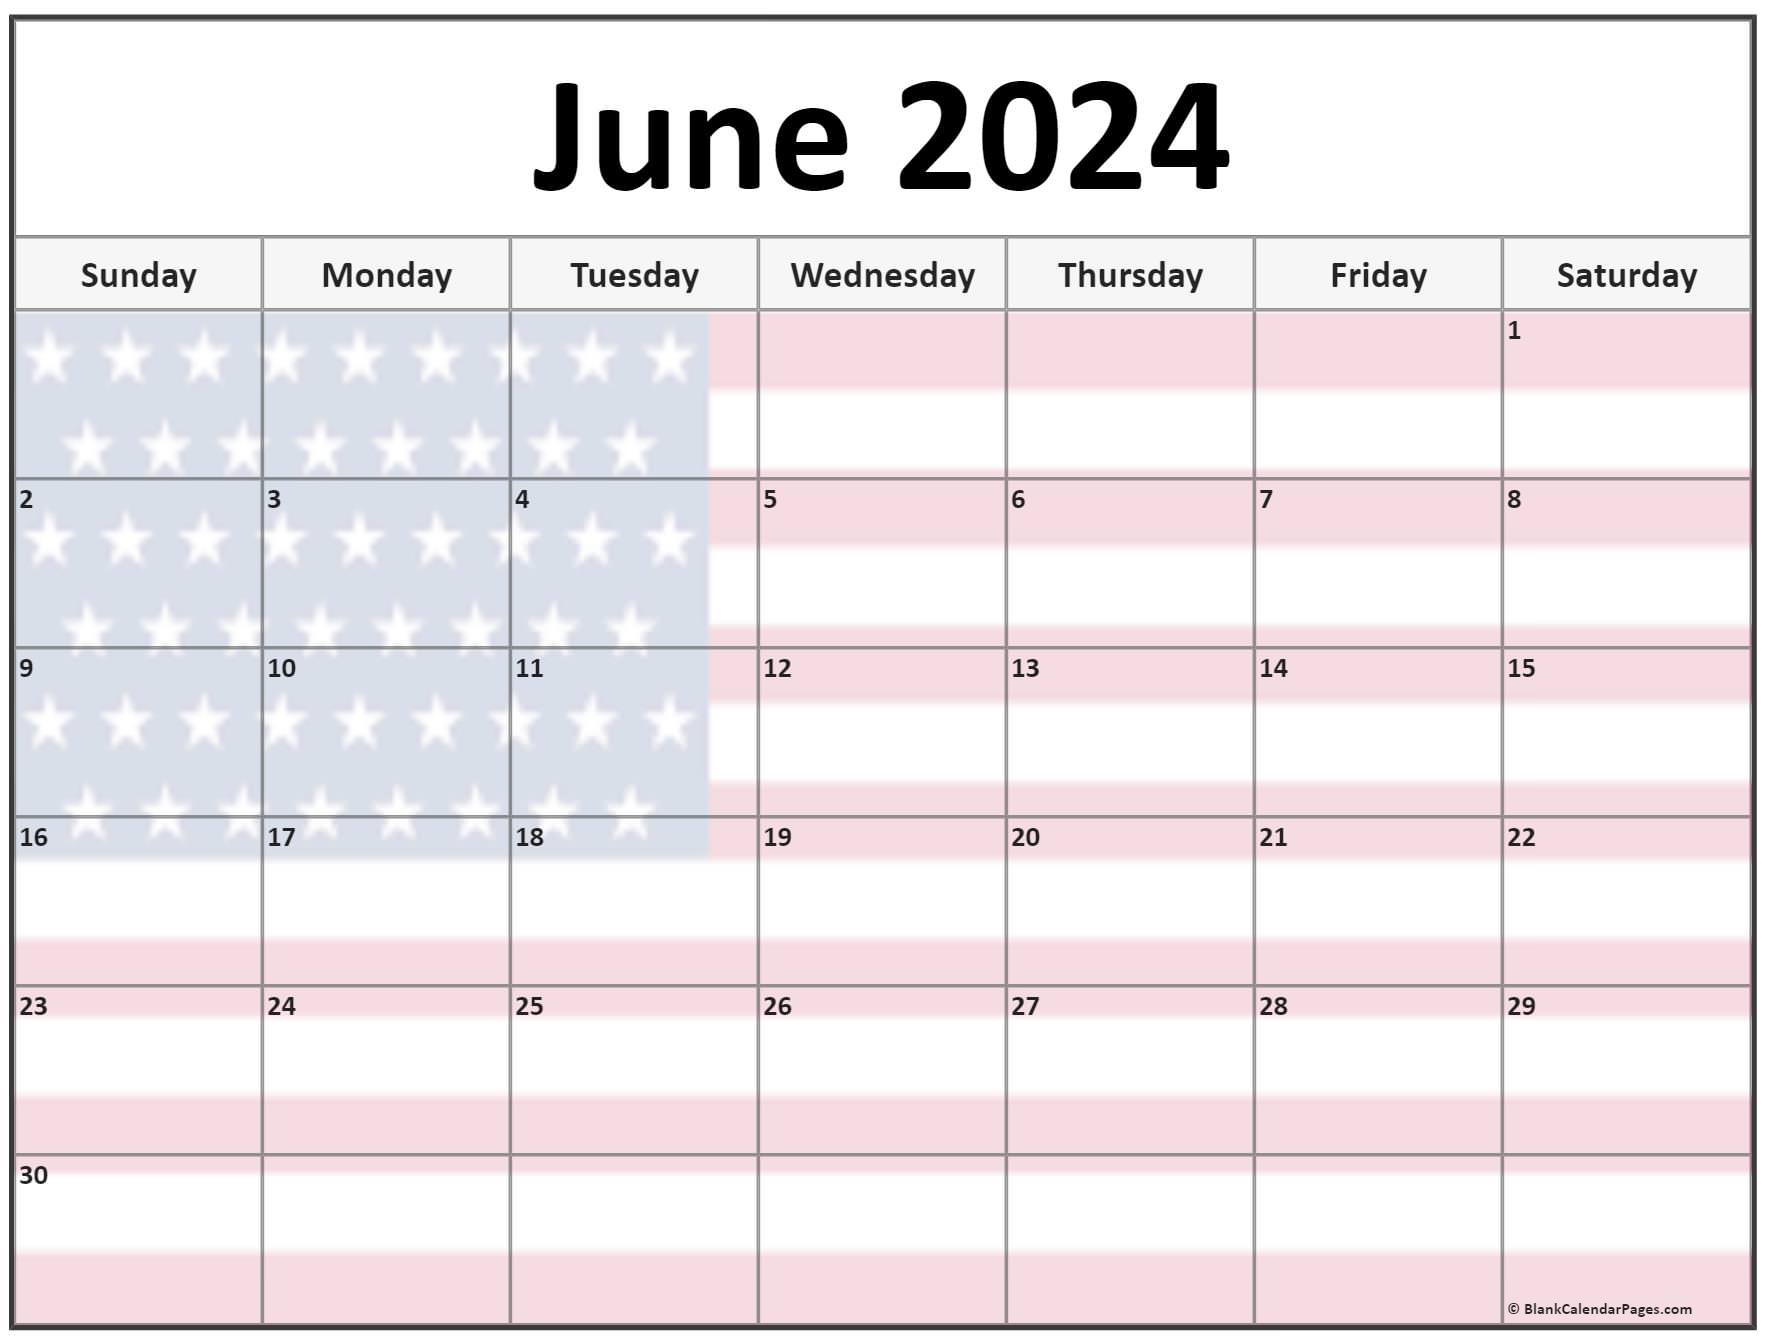 printable-june-2023-calendar-free-12-templates